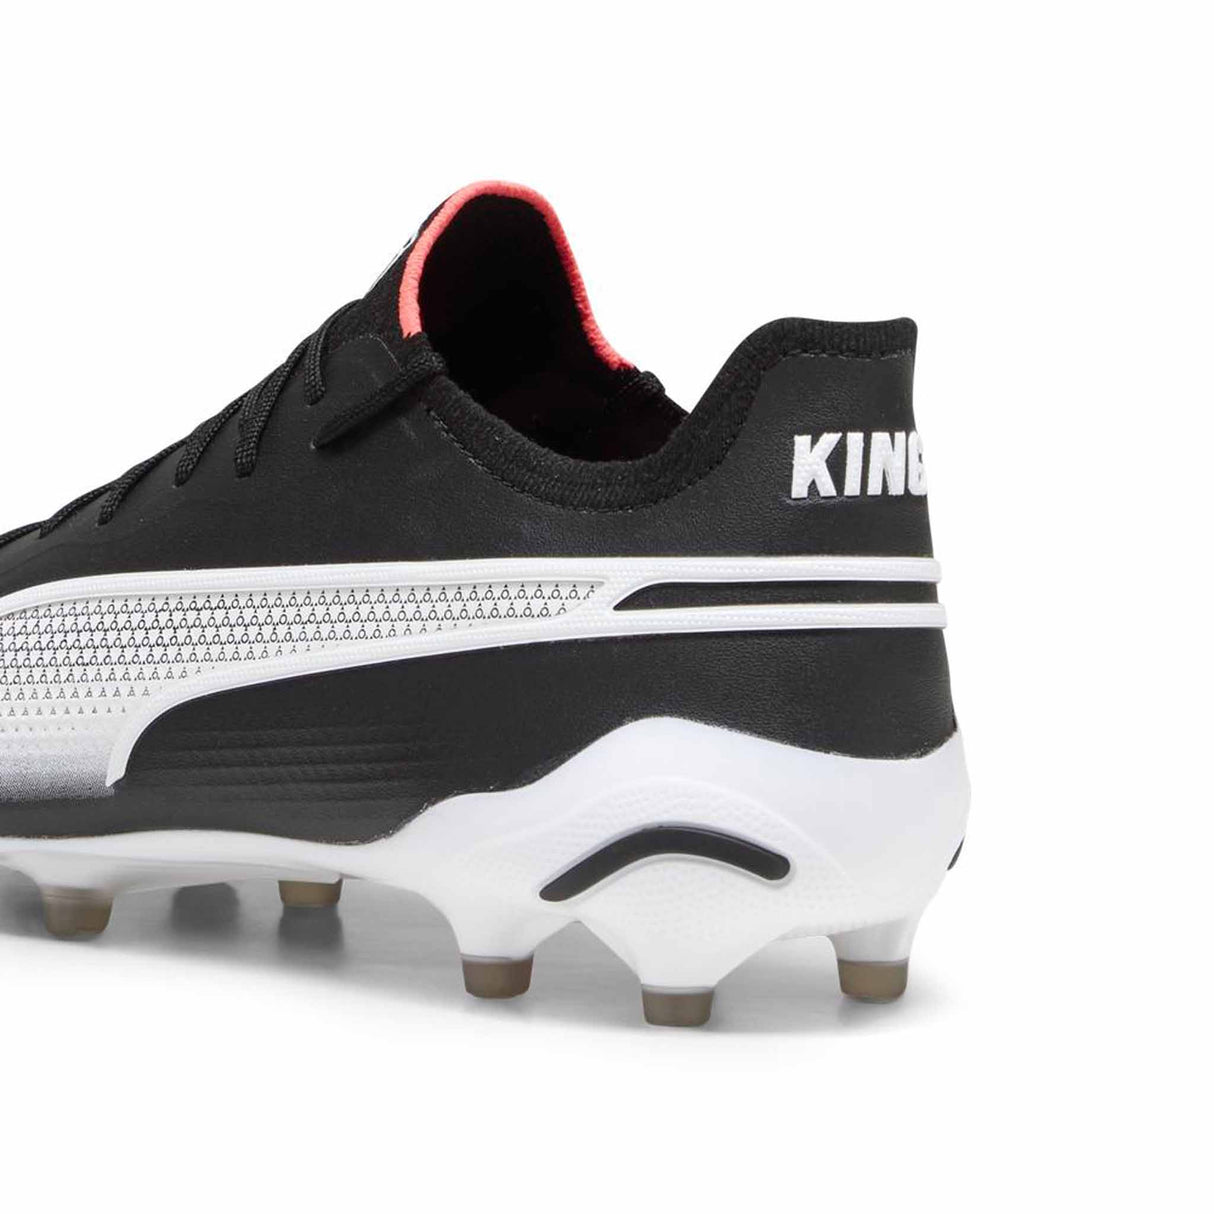 Puma King Ultimate FG chaussures de soccer - Black / Puma White / Fire Orchid